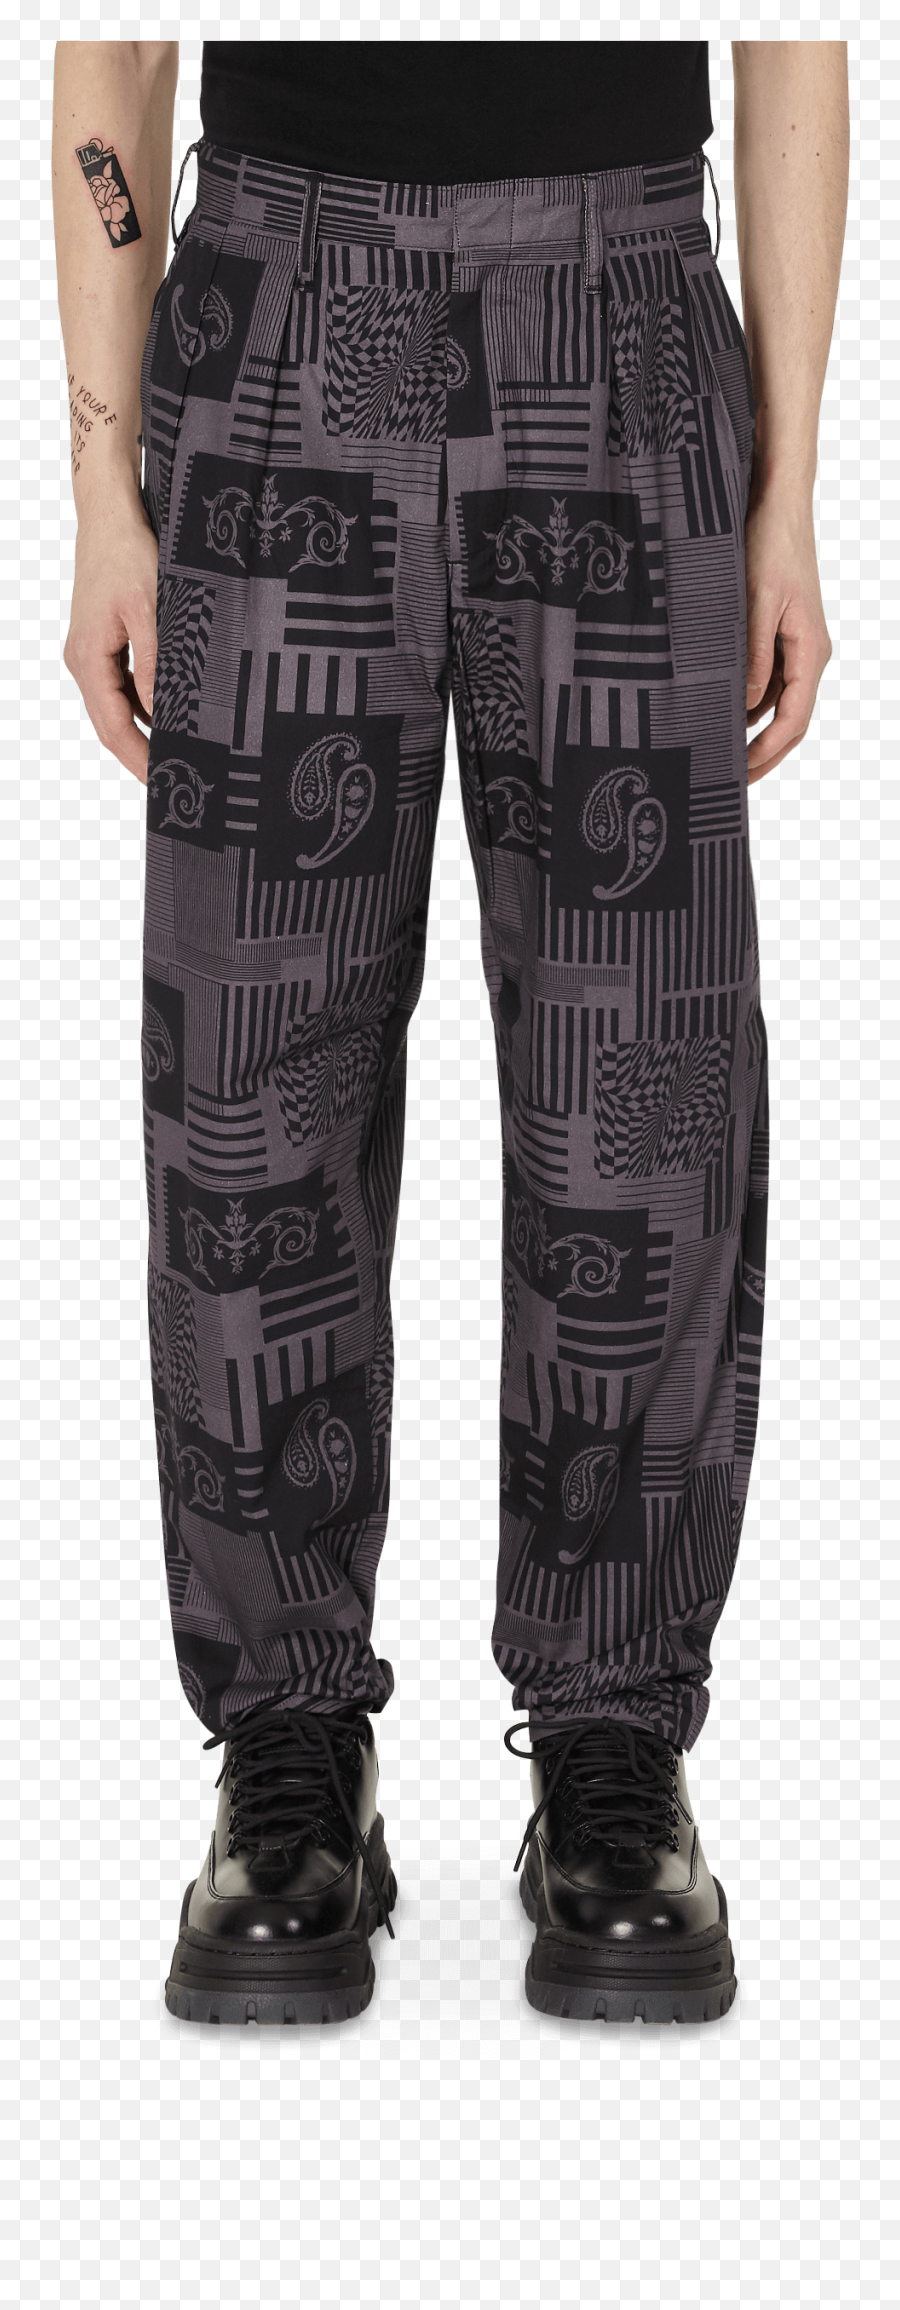 Flagstuff Cholo Pants - Chino Pants For Men Slam Jam Sweatpants Png,Black Pants Png